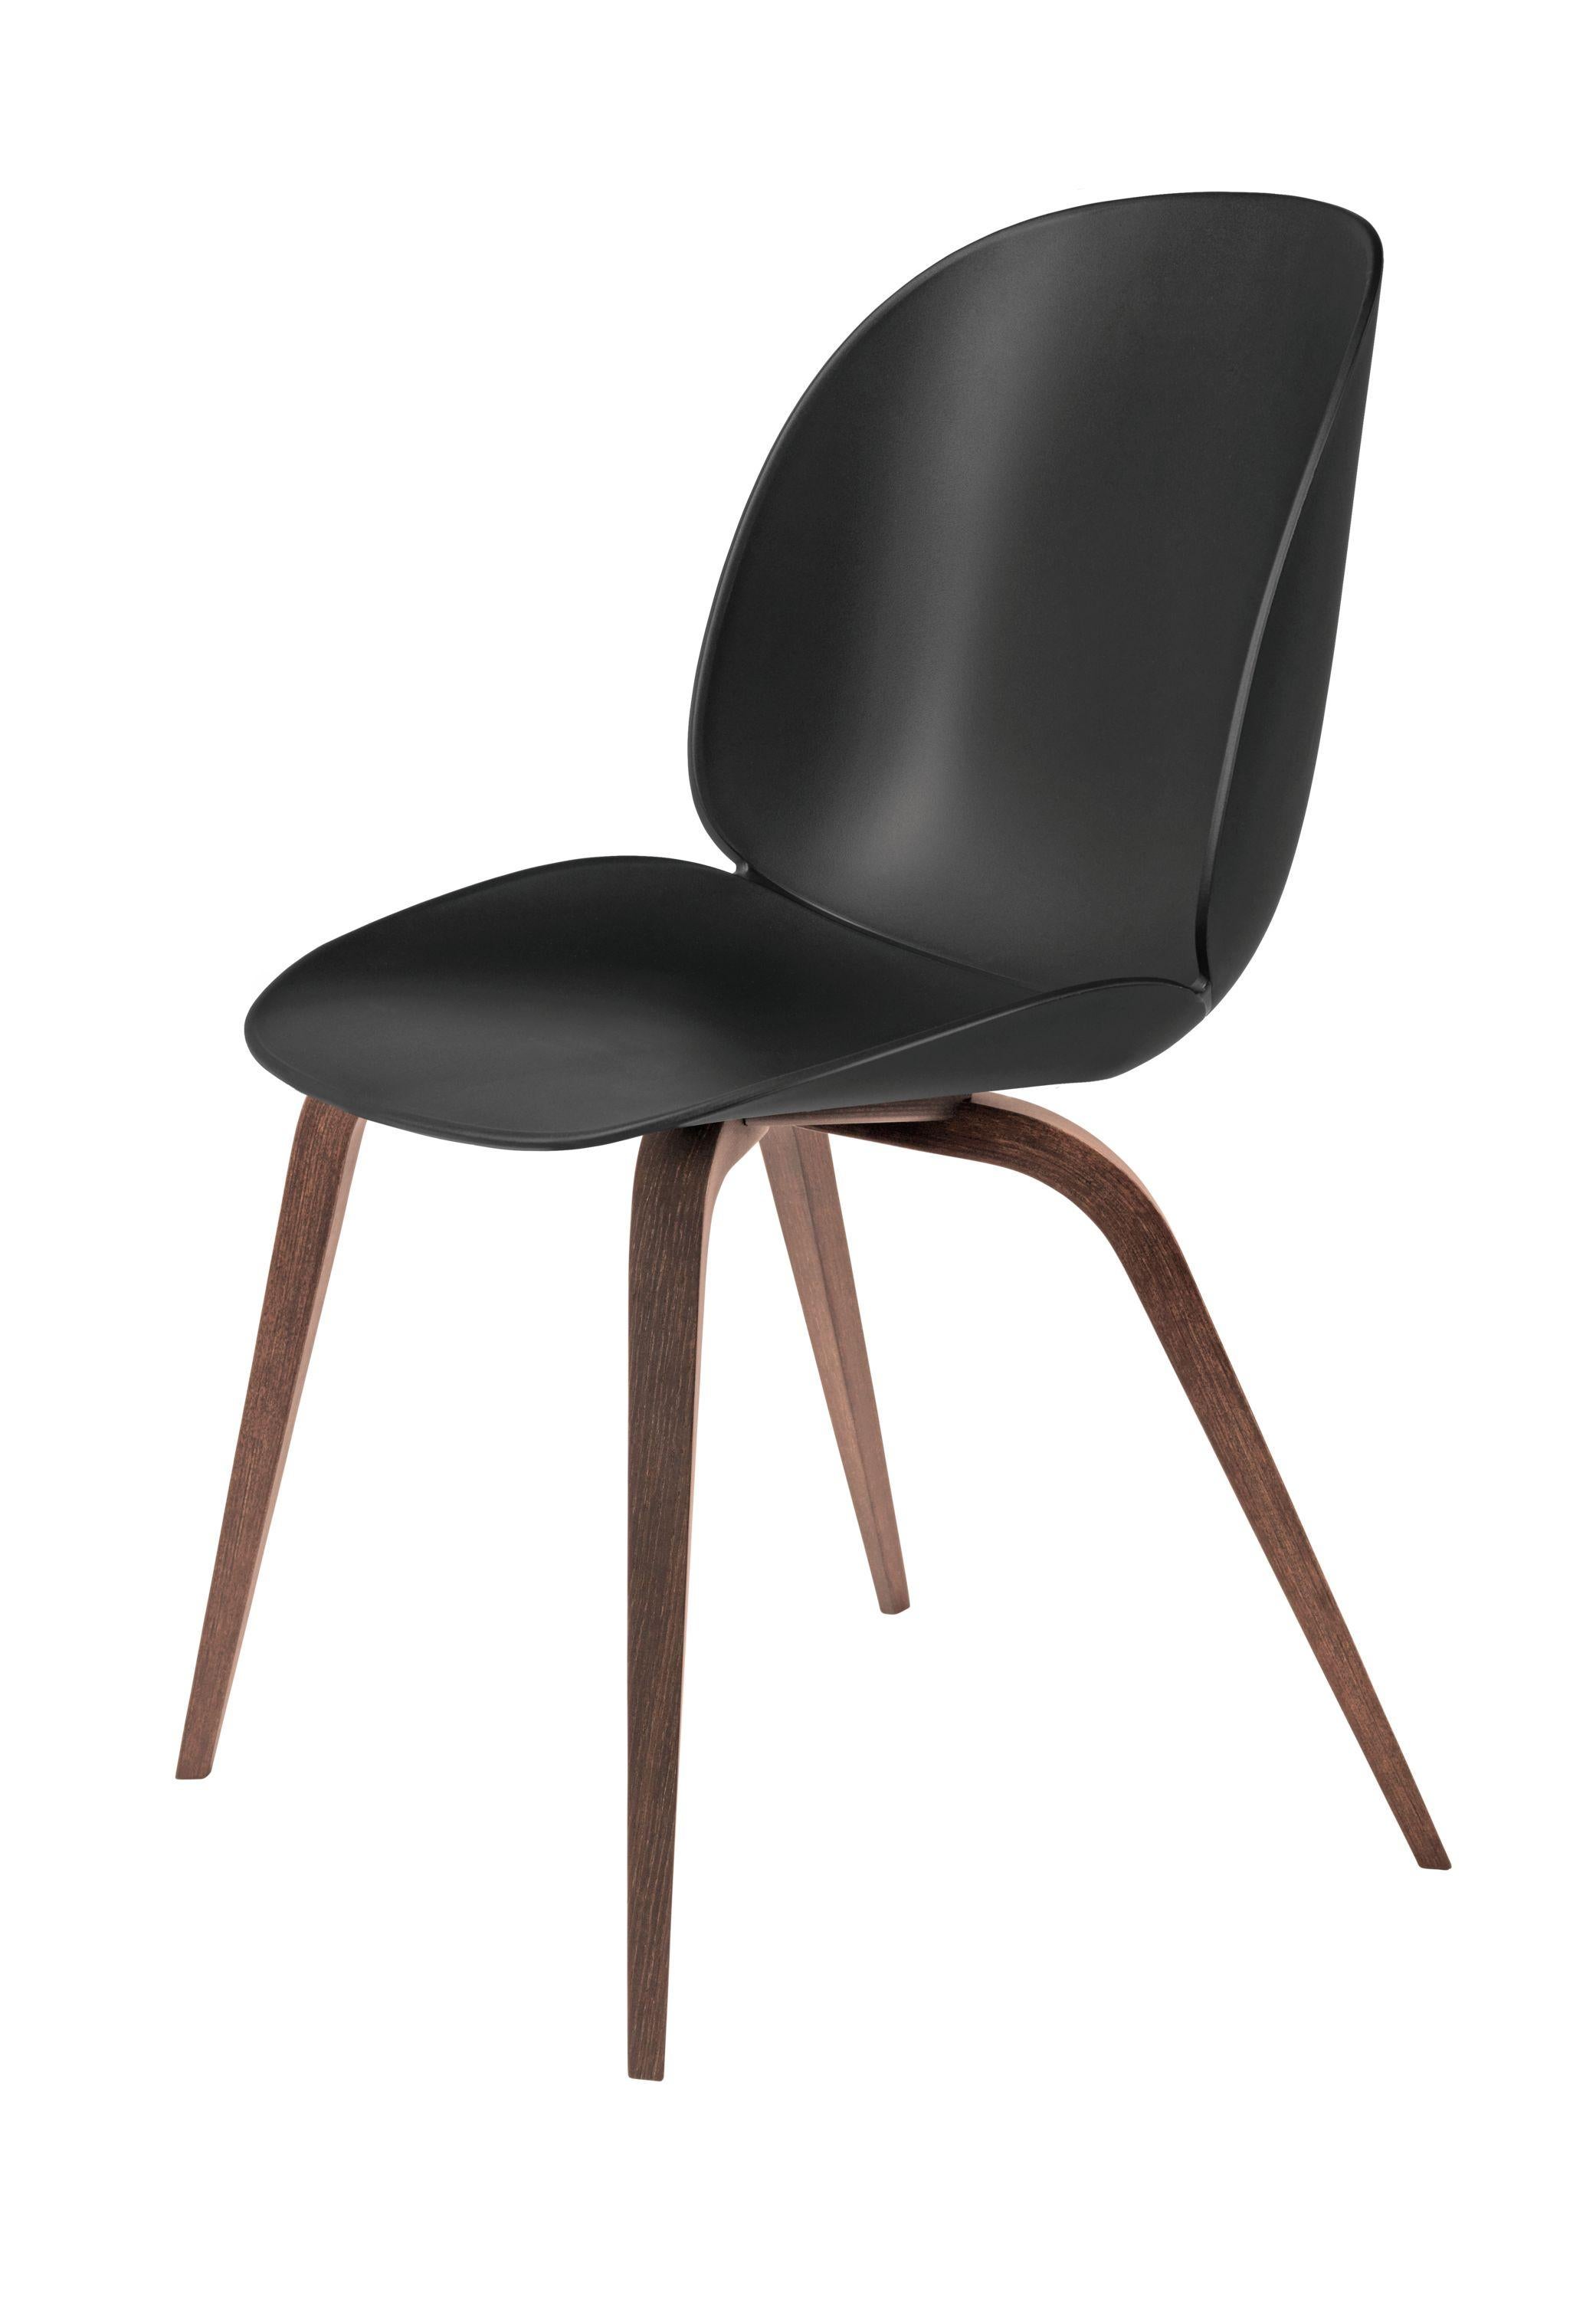 Danish GamFratesi 'Beetle' Dining Chair with Walnut Conic Base